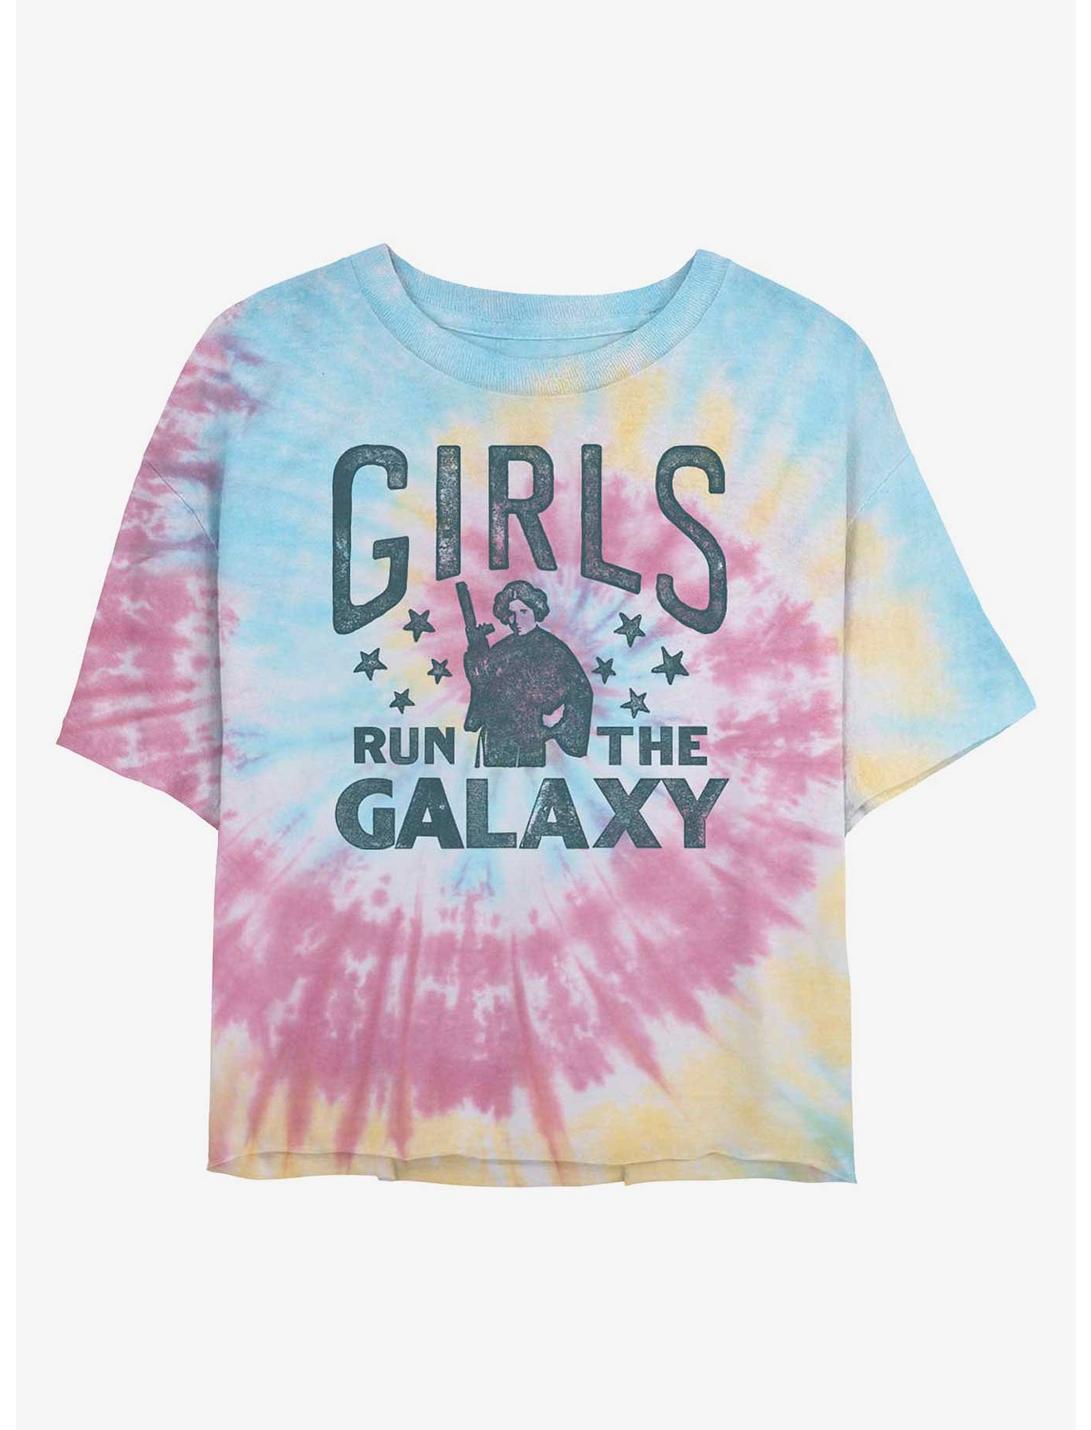 Star Wars Girls Run The Galaxy Tie Dye Crop Girls T-Shirt, BLUPNKLY, hi-res